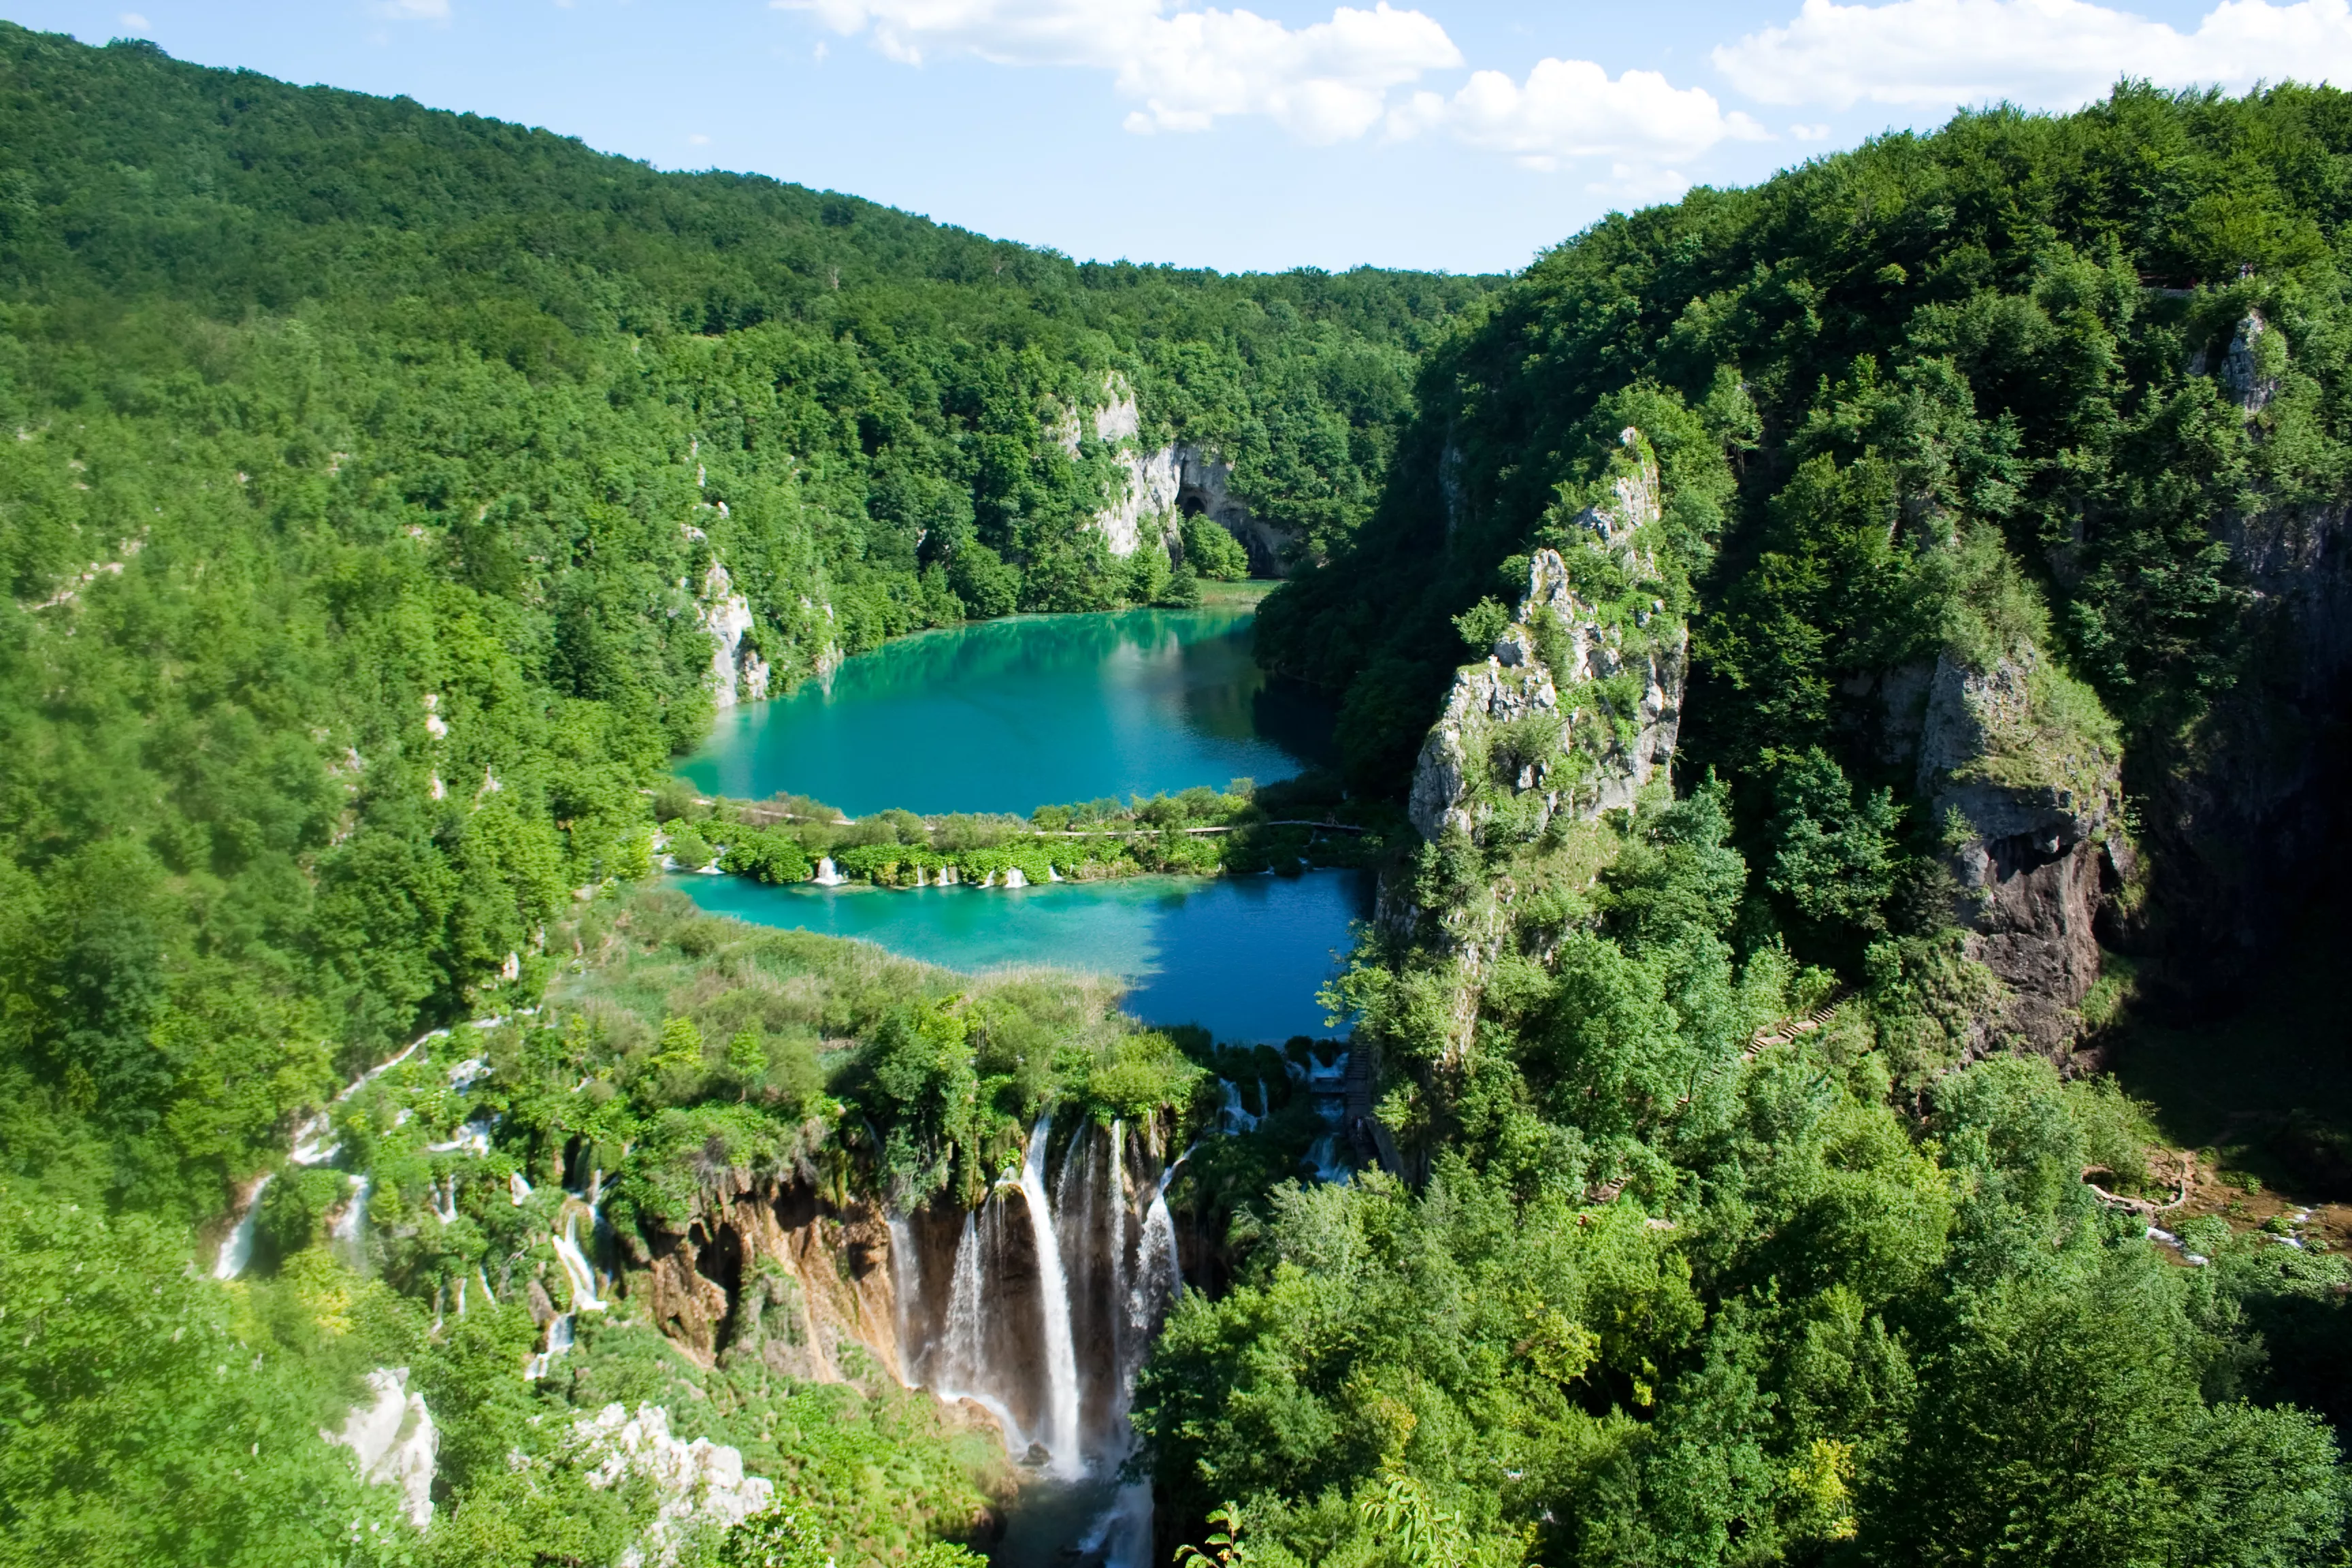 Plitvice Lakes National Park in Croatia, Europe | Waterfalls,Lakes,Trekking & Hiking - Rated 9.8